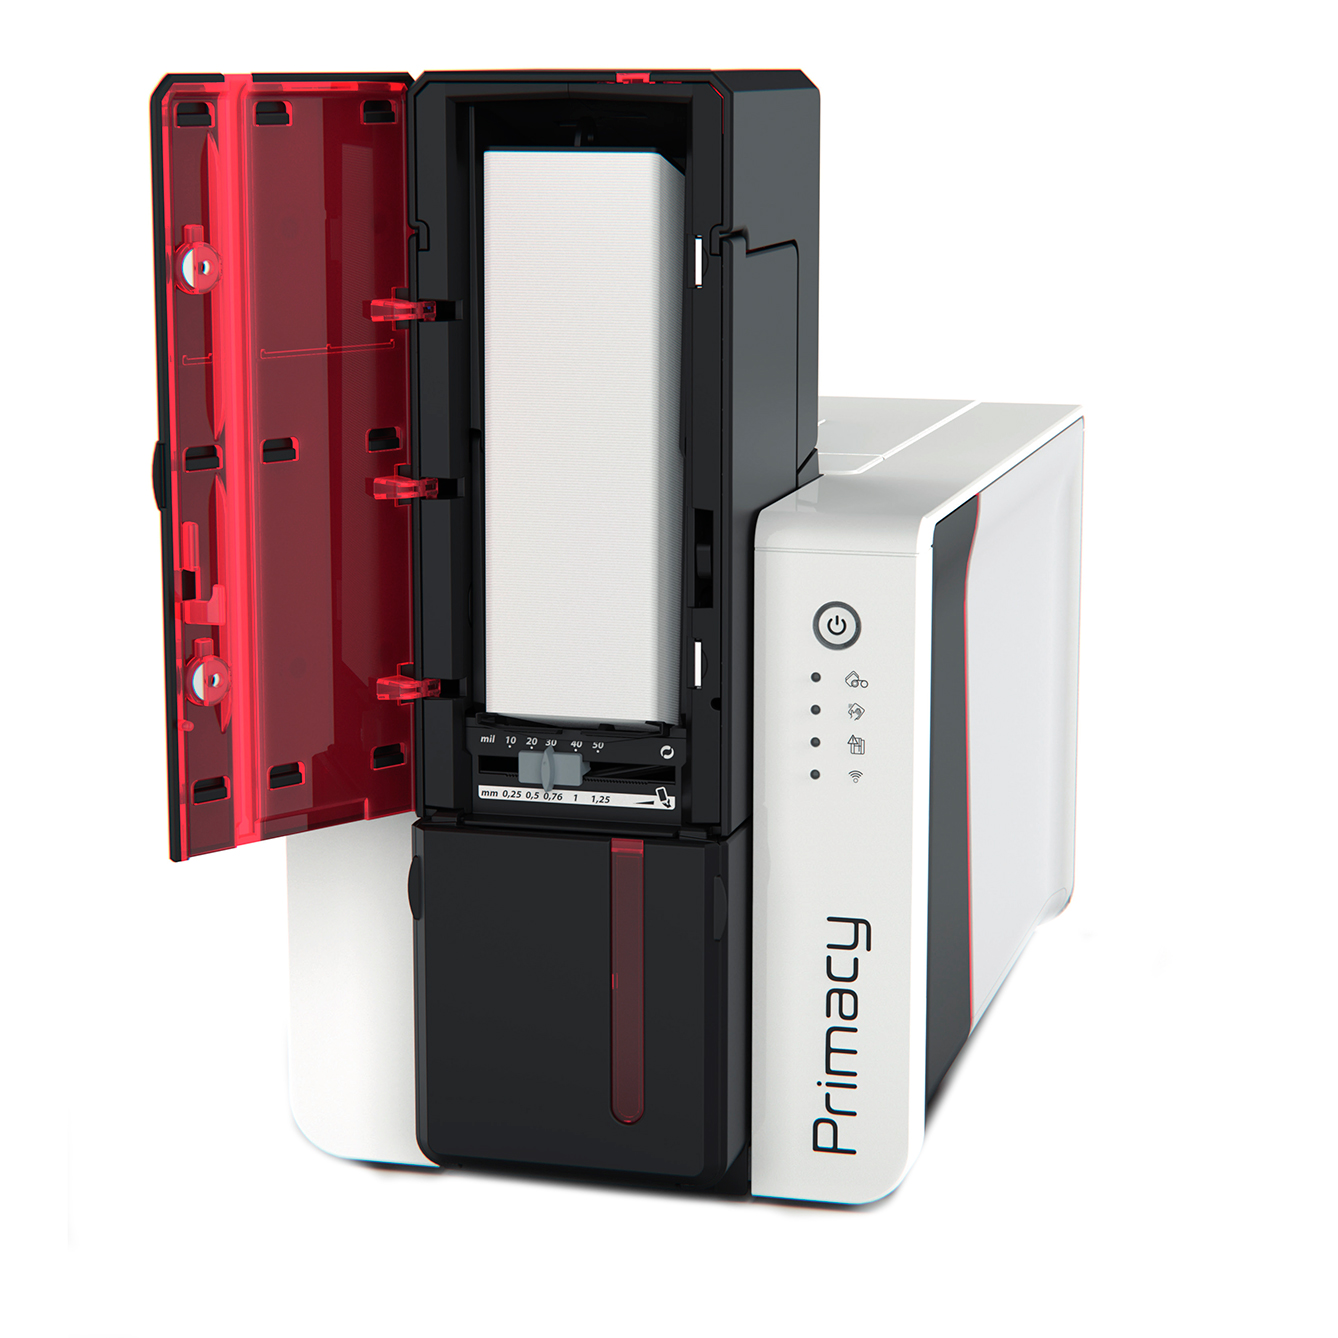 Принтер пластиковых карт Evolis Primacy 2, 300 dpi, USB, Wi-Fi PM2-0003-M